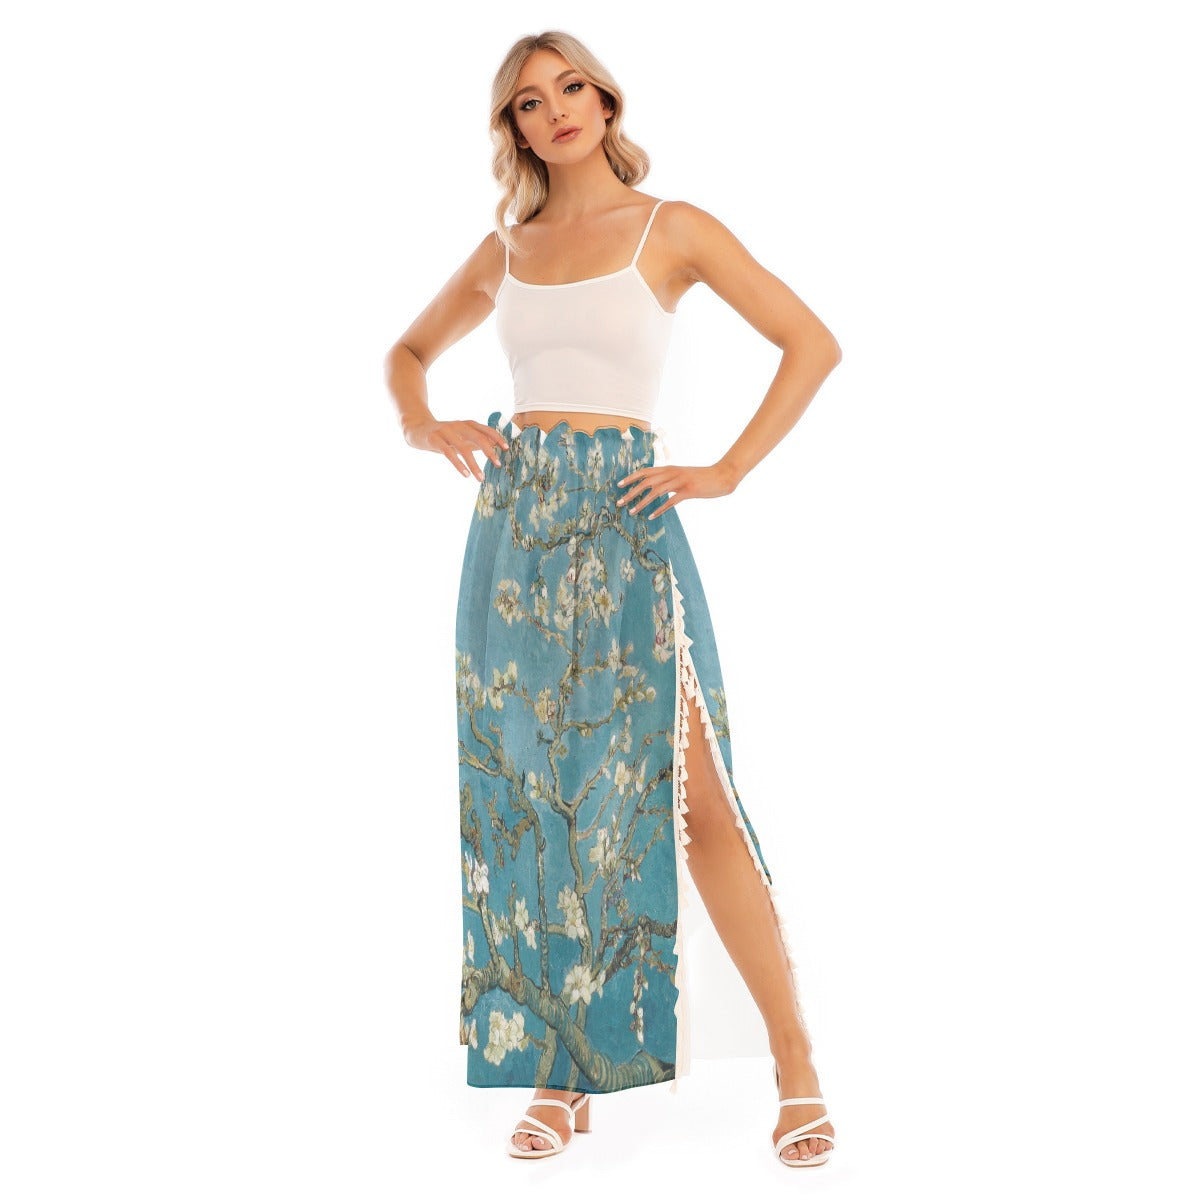 Whimsical Fashion - Model Wearing Almond Blossom Skirt